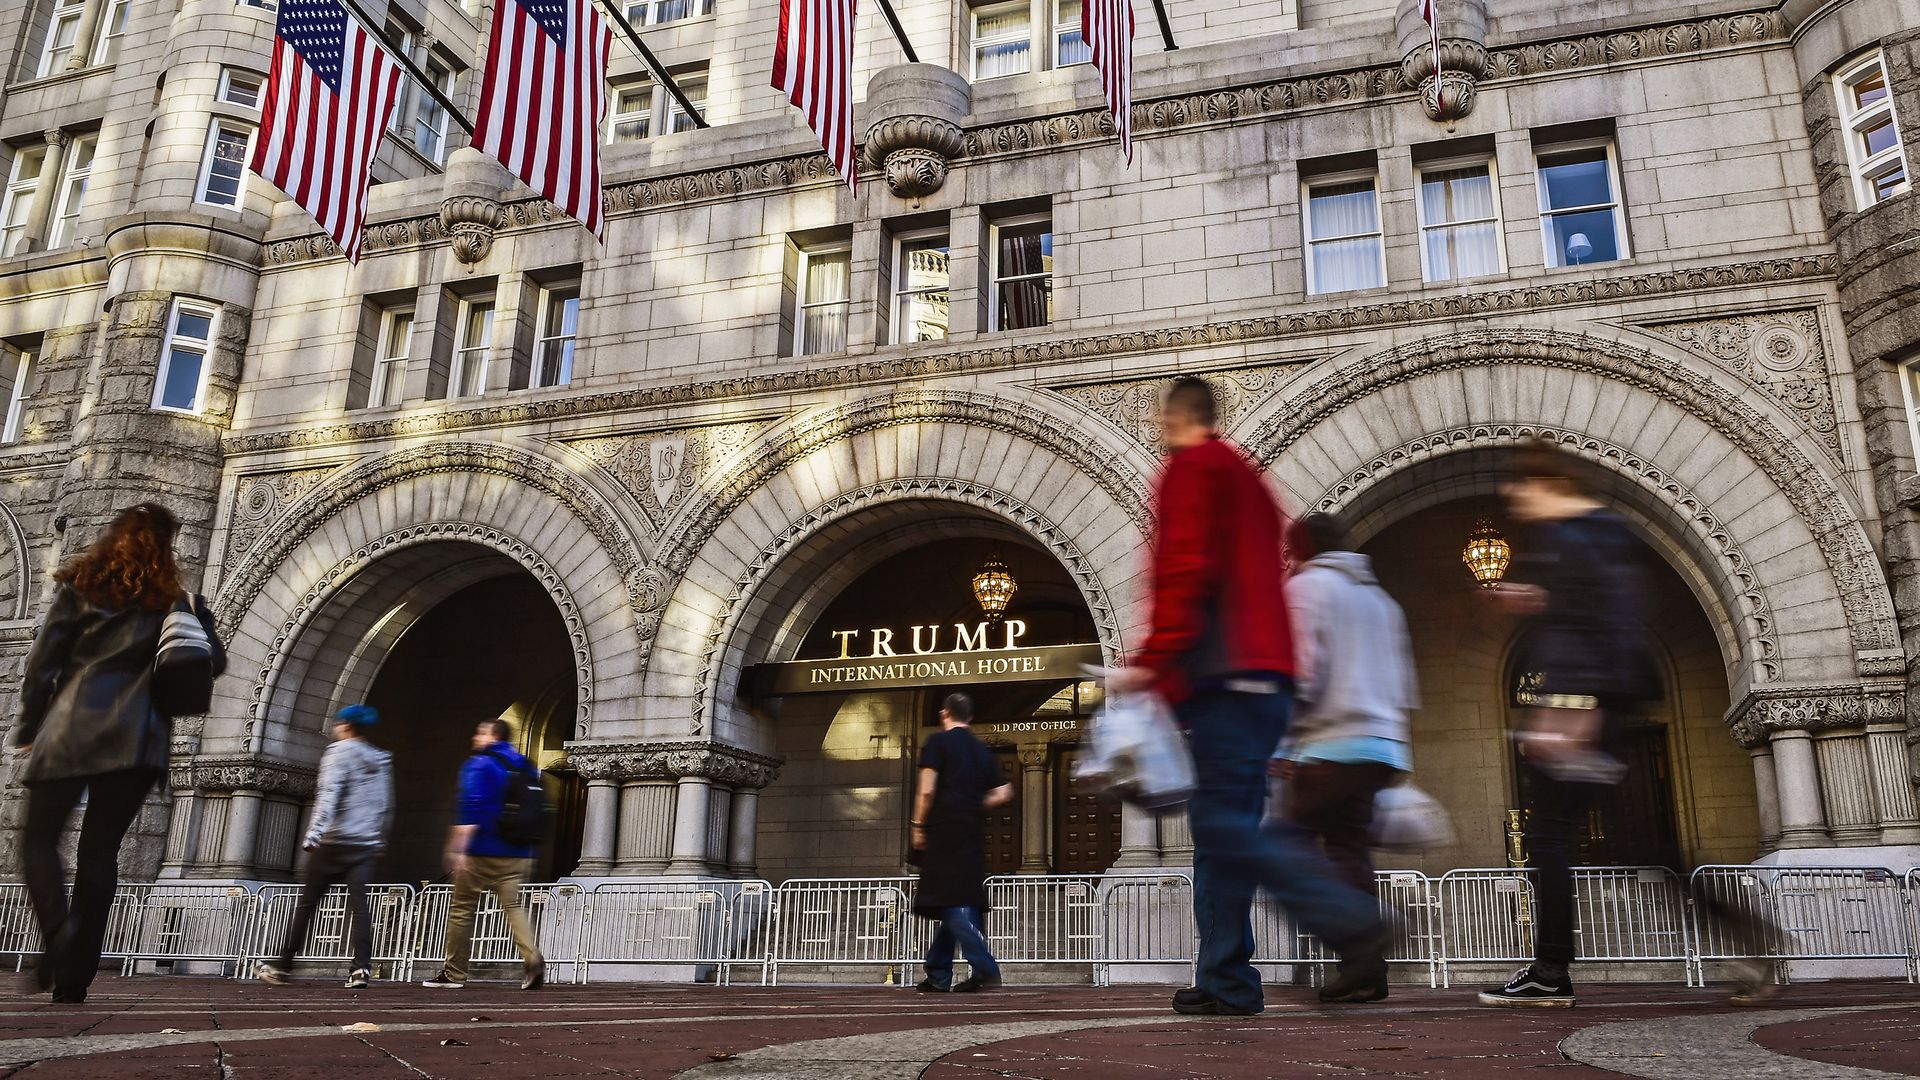 The Trump Hotel in D.C.